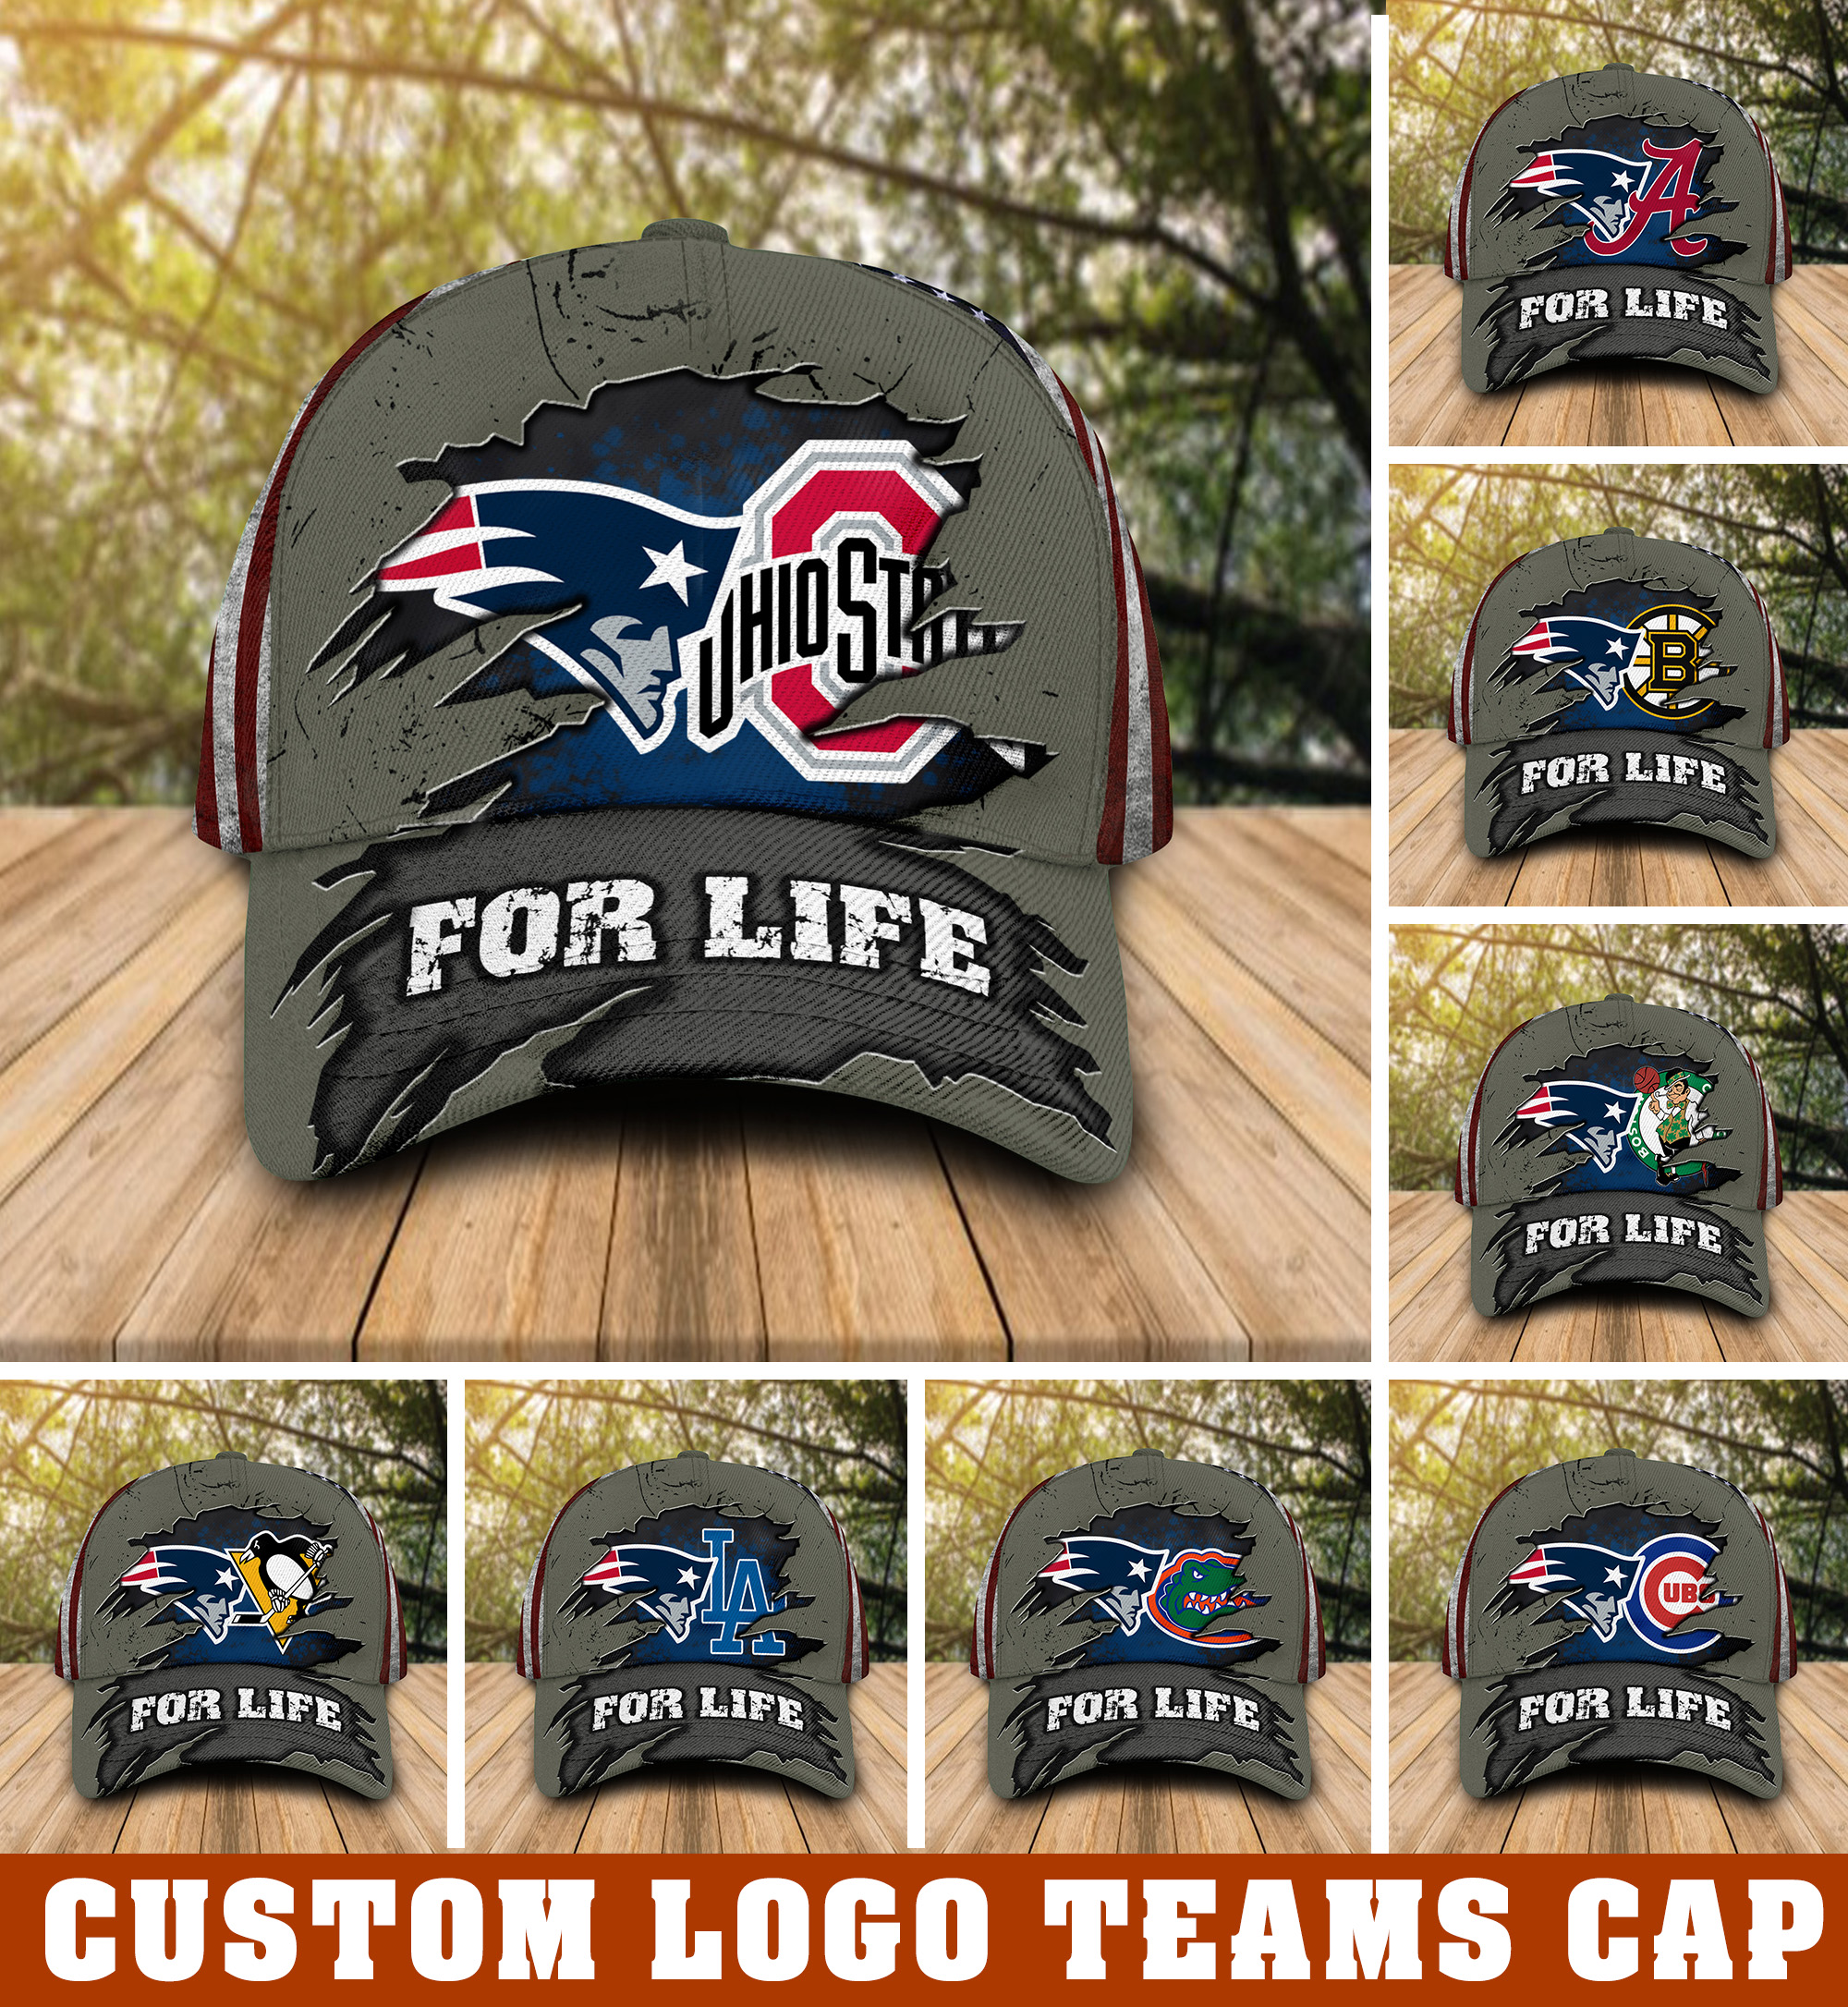 New England Patriots and Custom logo Sport teams For Life Cap